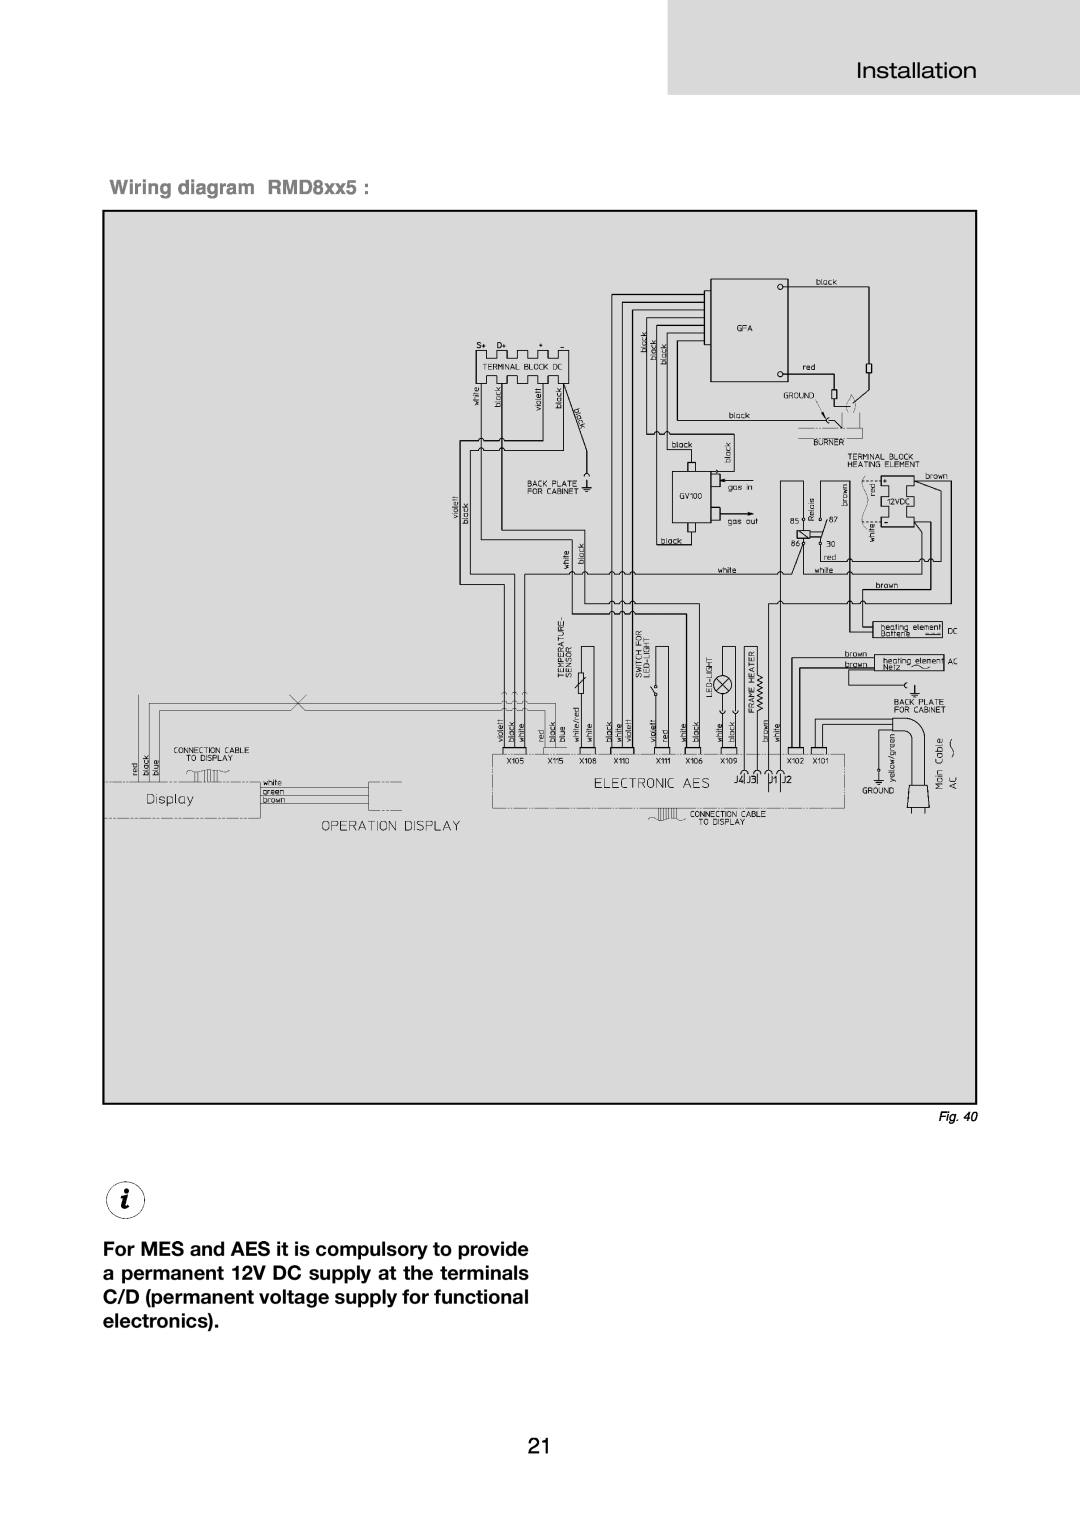 Dometic RMD 8501, RMD 8505, RMD 8551, RMD 8555 installation instructions Wiring diagram RMD8xx5, Installation 